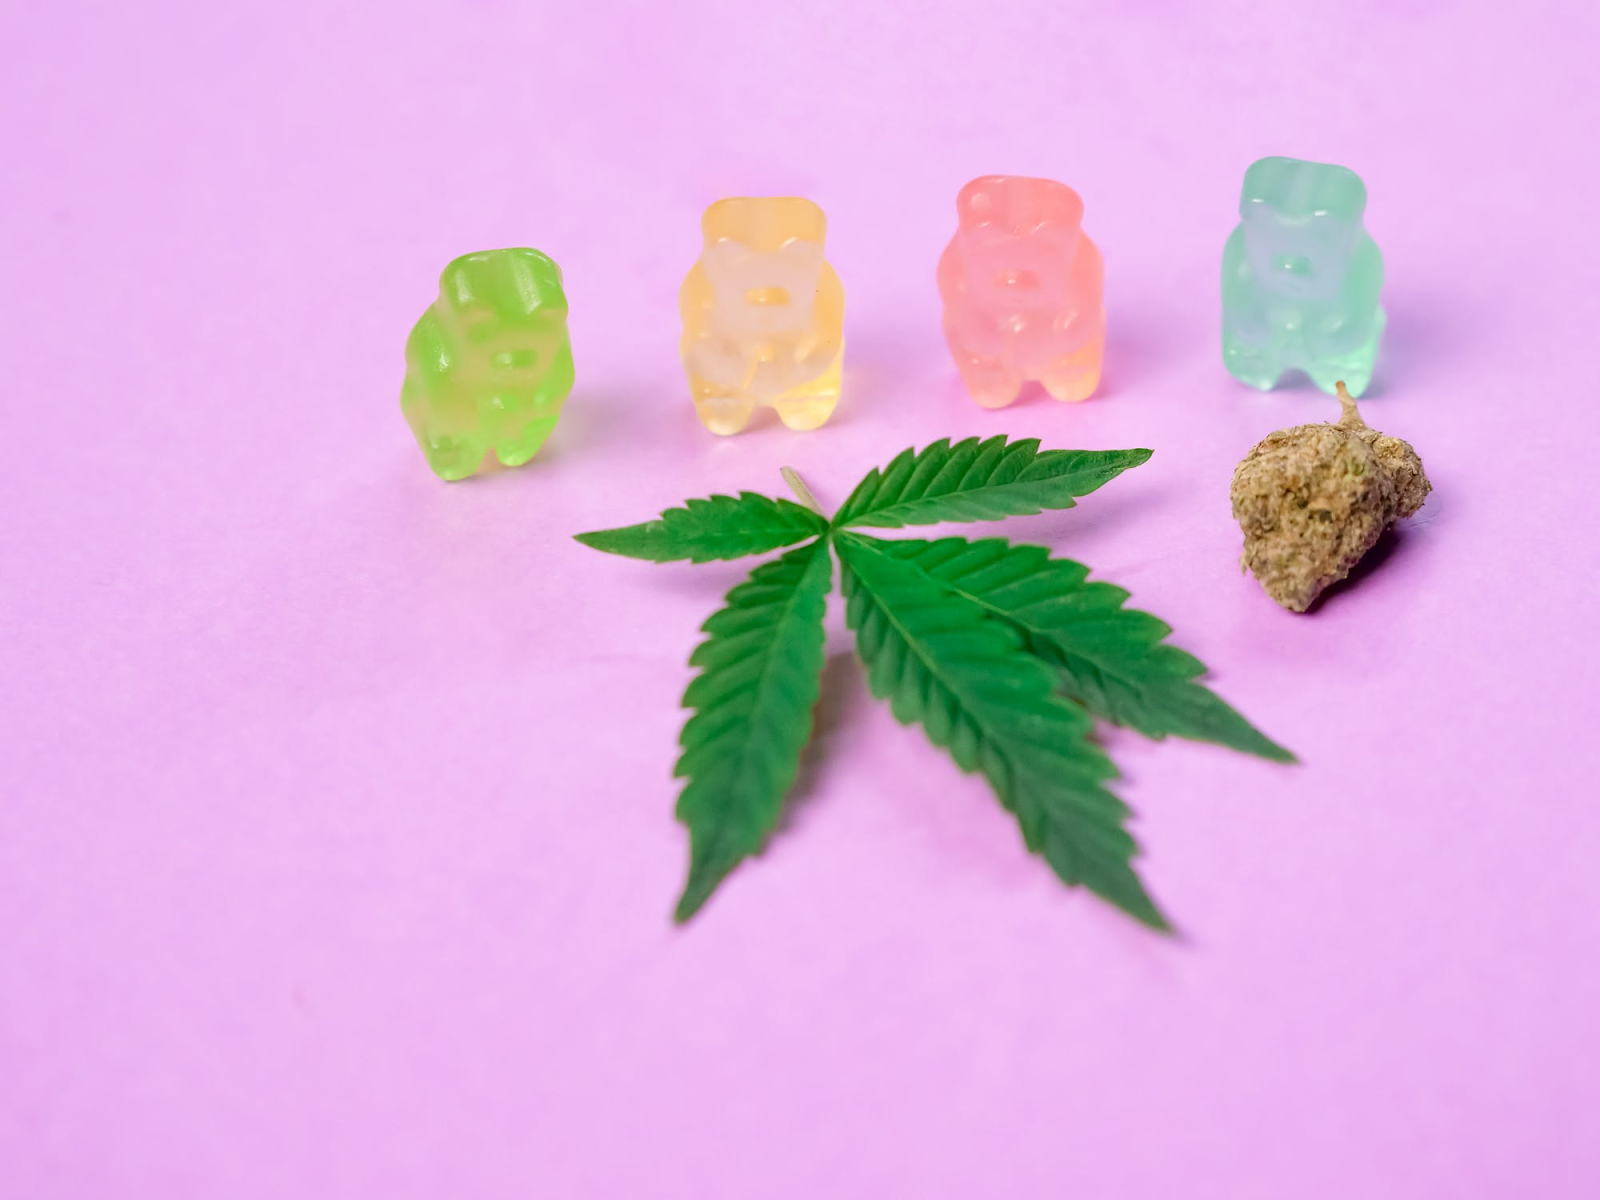 Leaf, Gummy Bears, and Kush